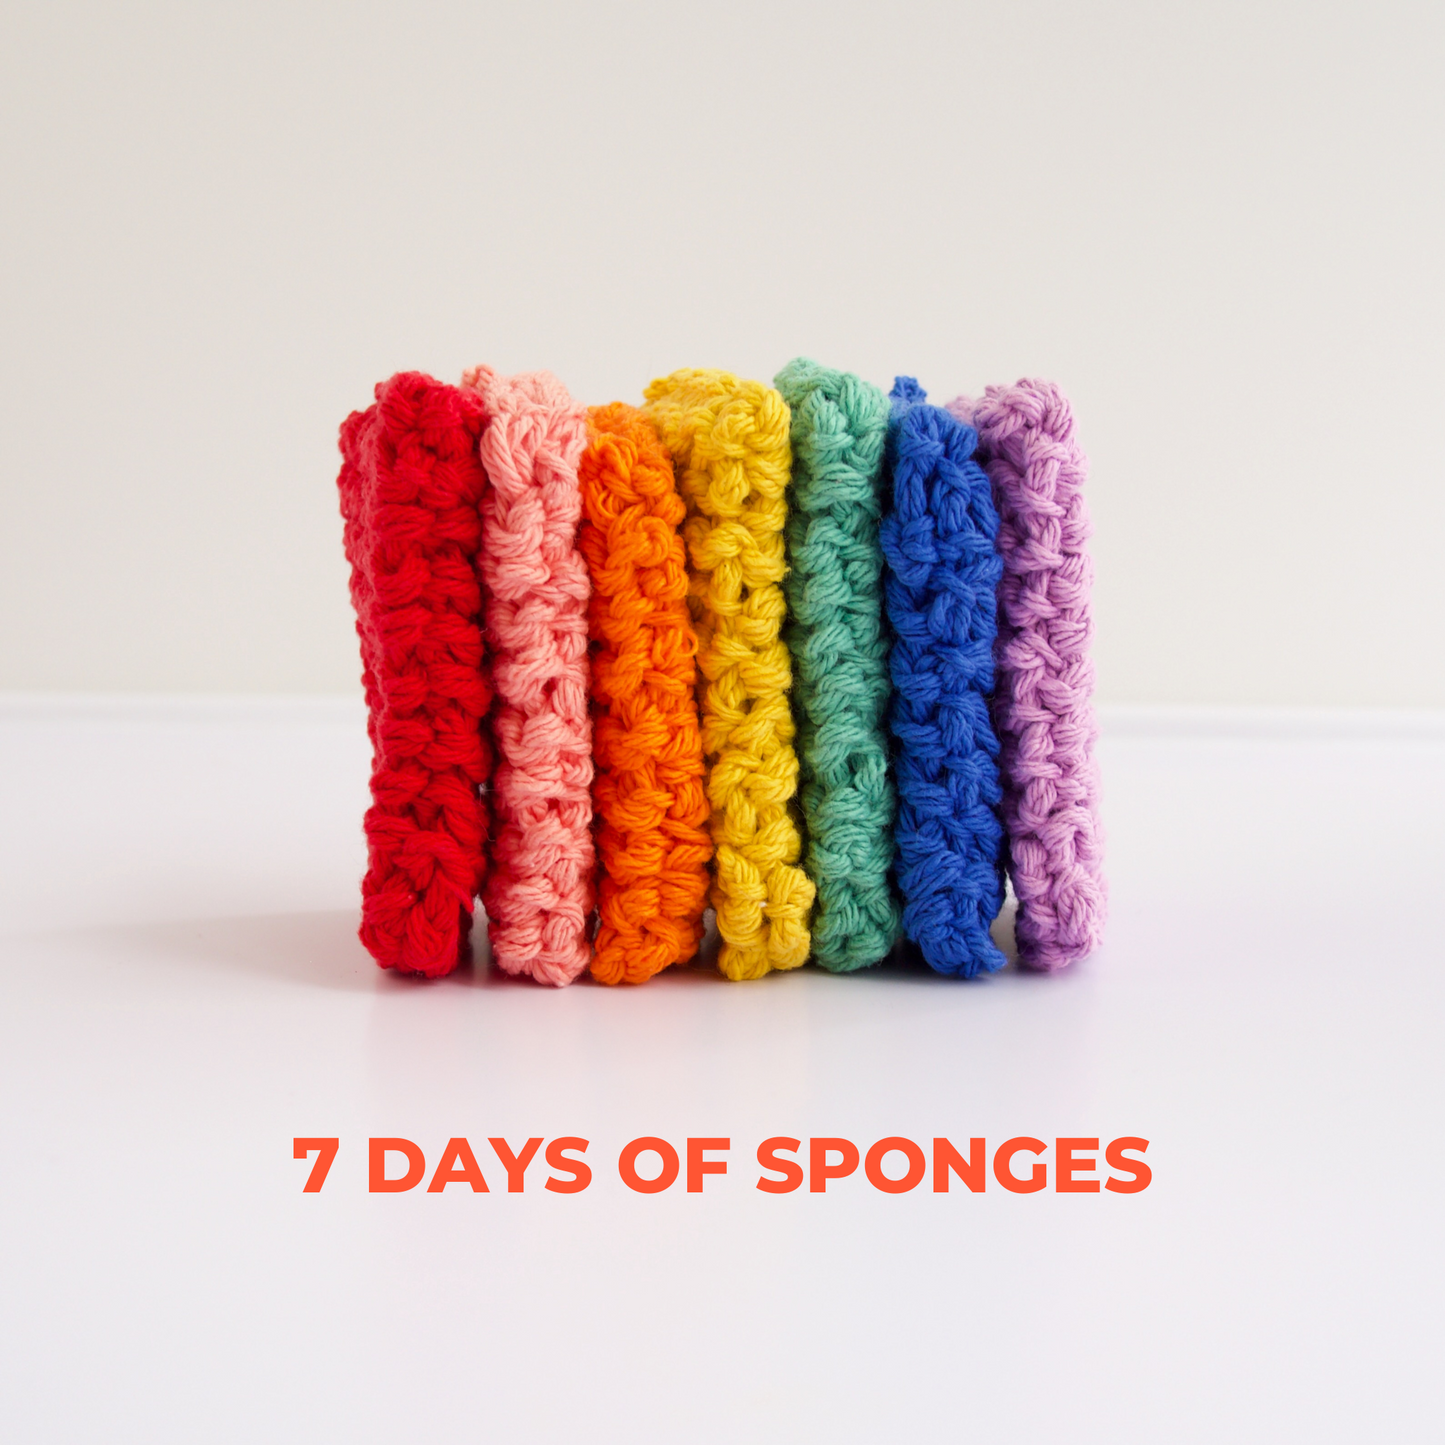 7 Days of Sponges